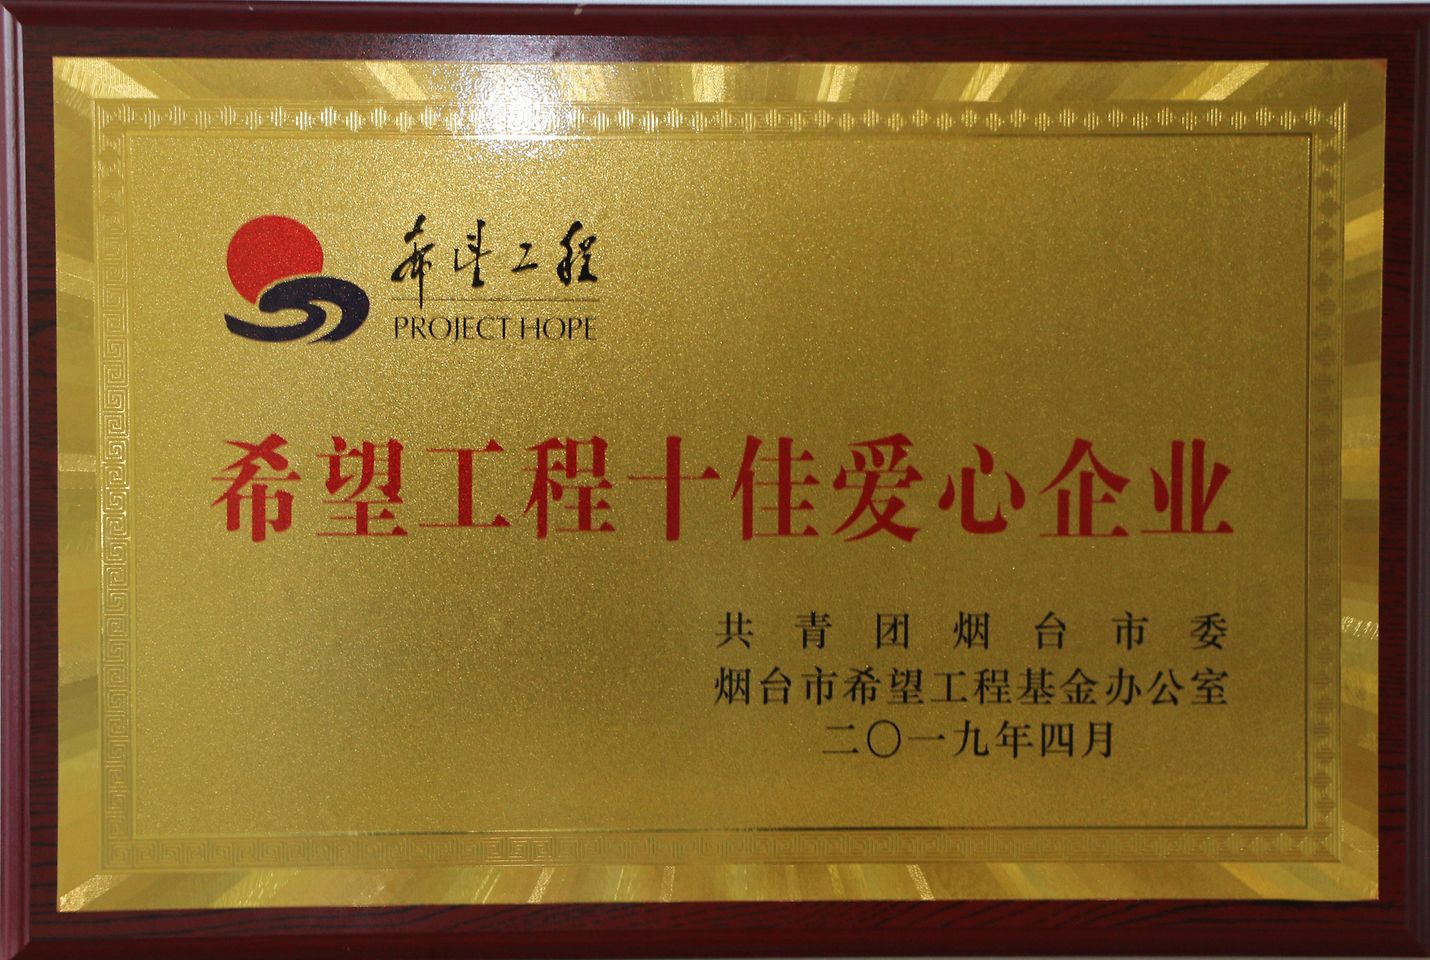 Henkel won the "Top Ten Caring Enterprise of Hope Project" award